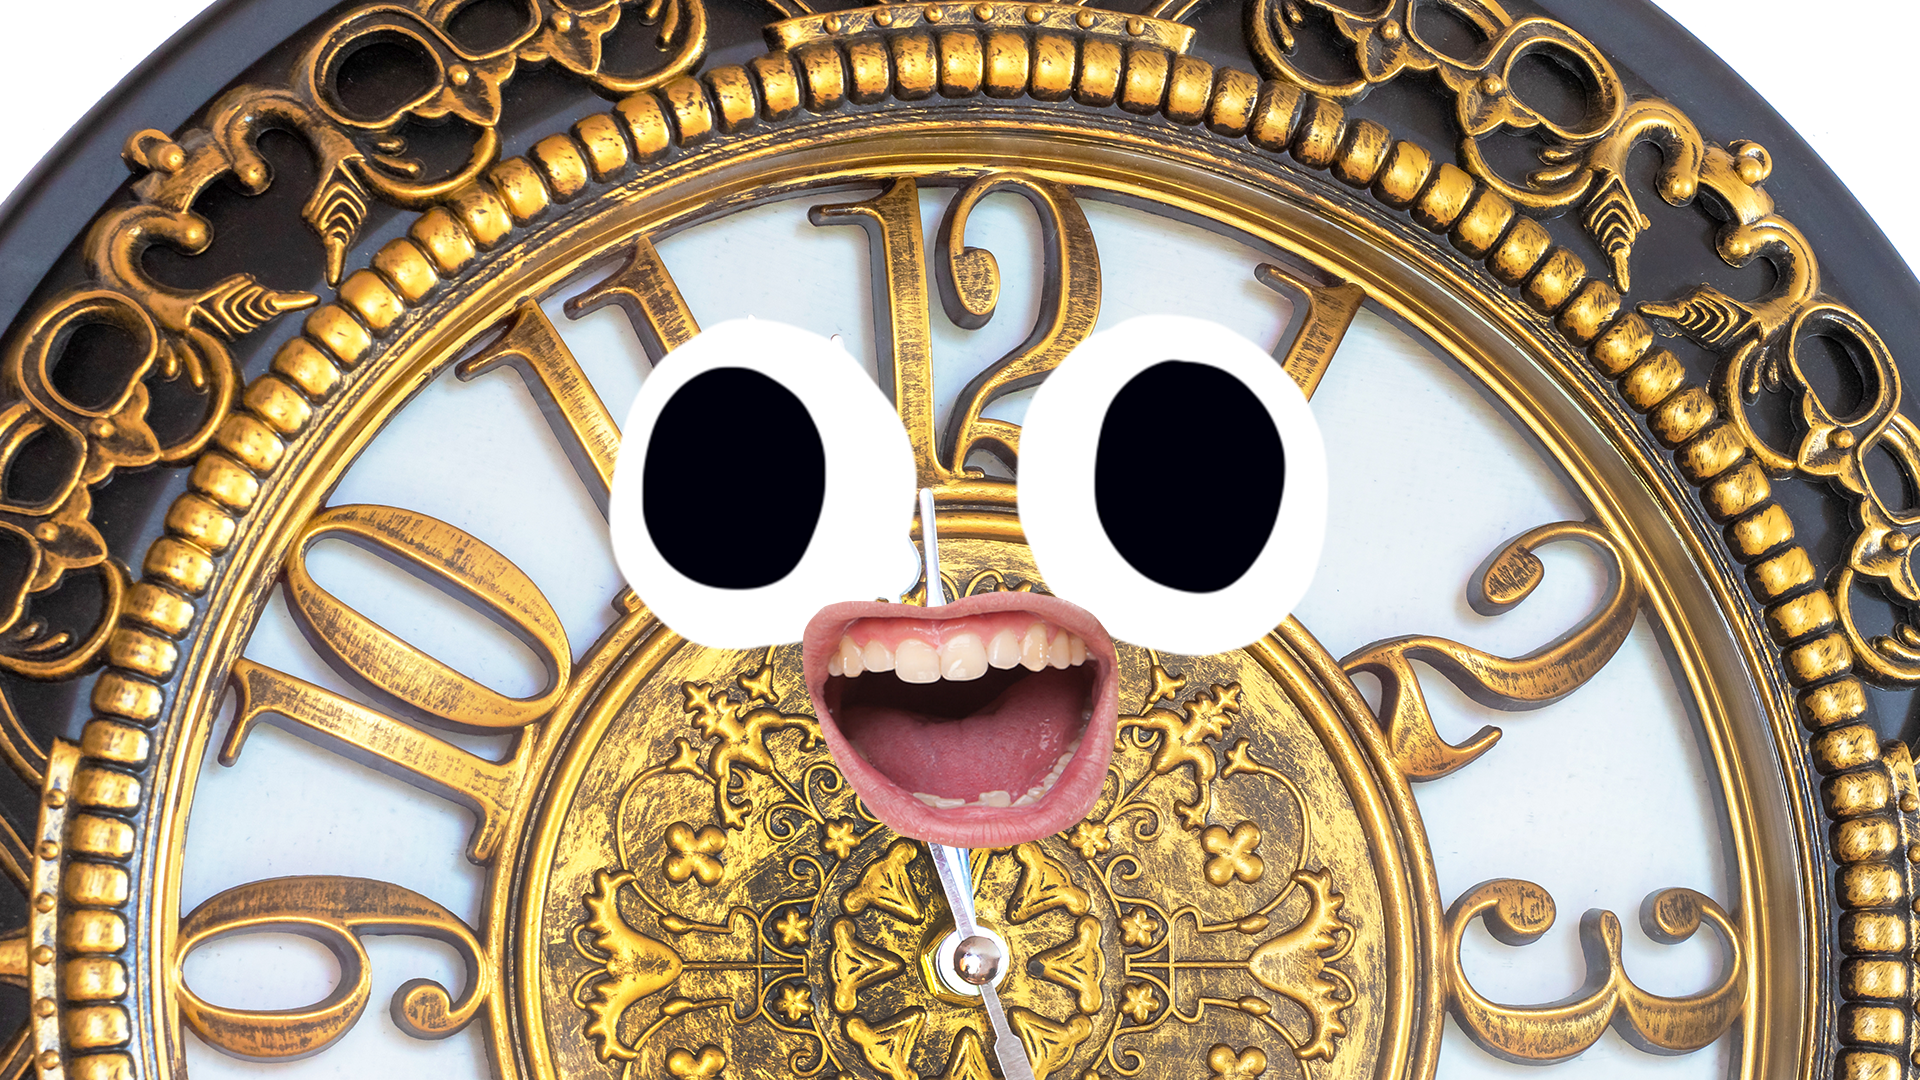 A golden clock with a goofy face